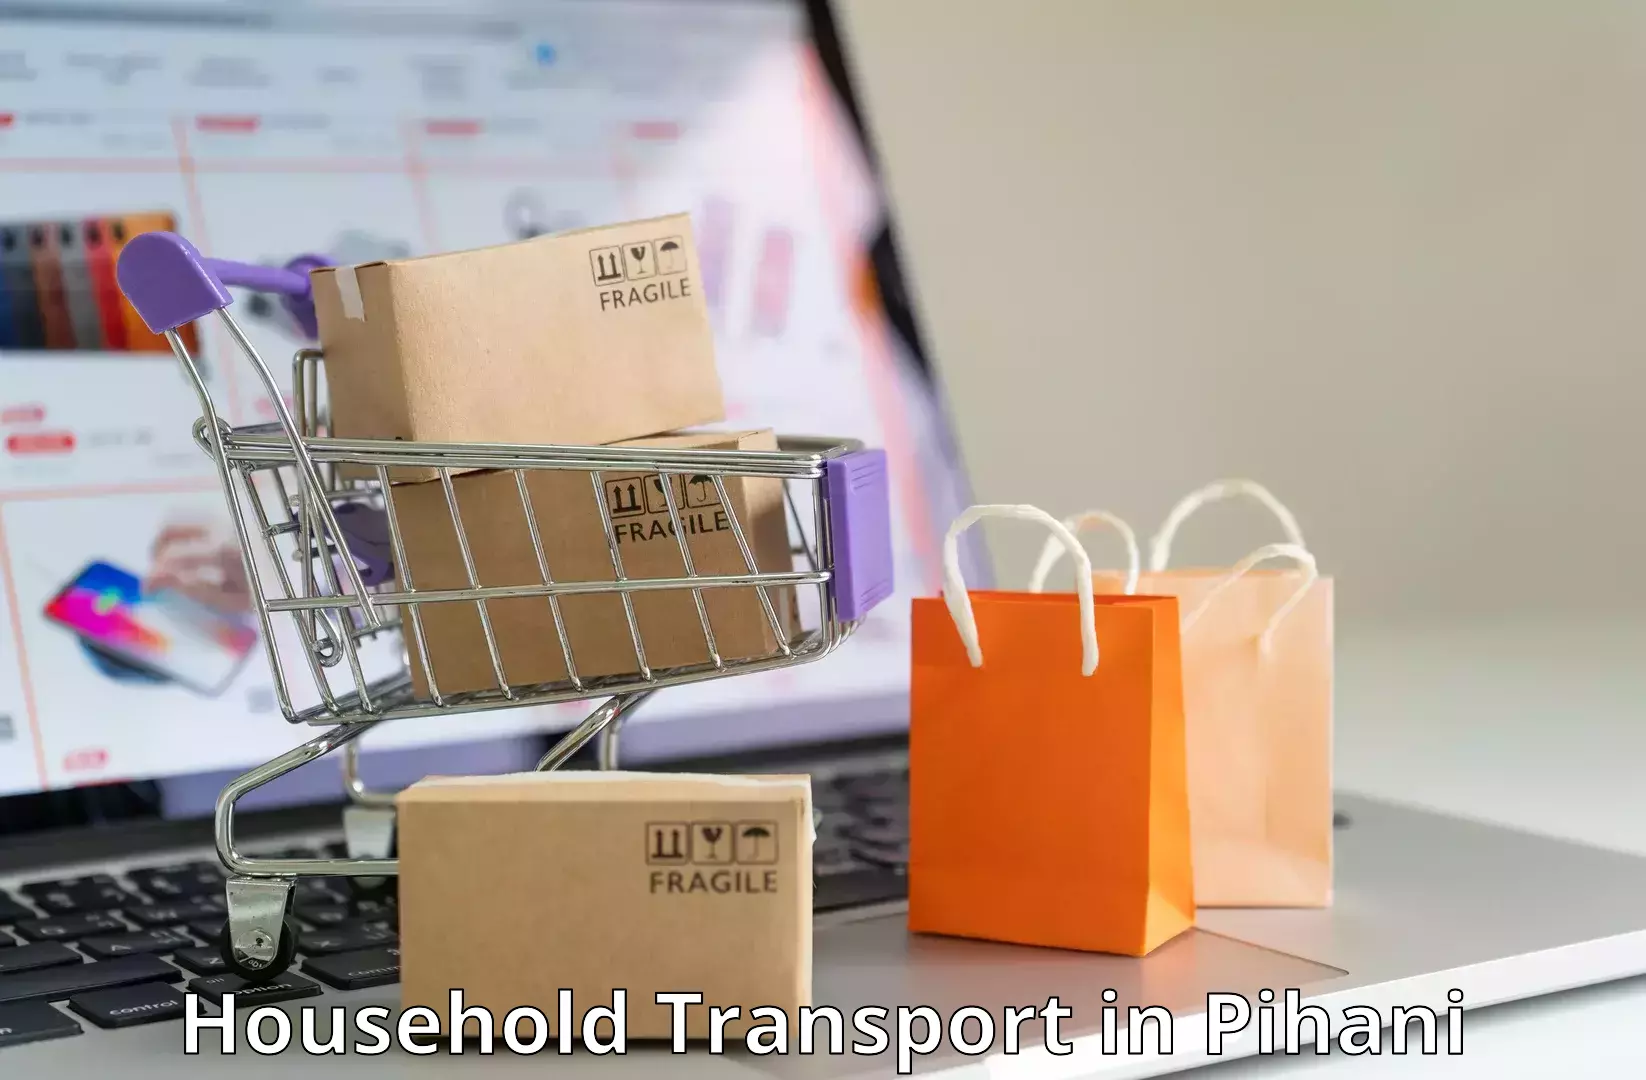 Household goods transport service in Pihani